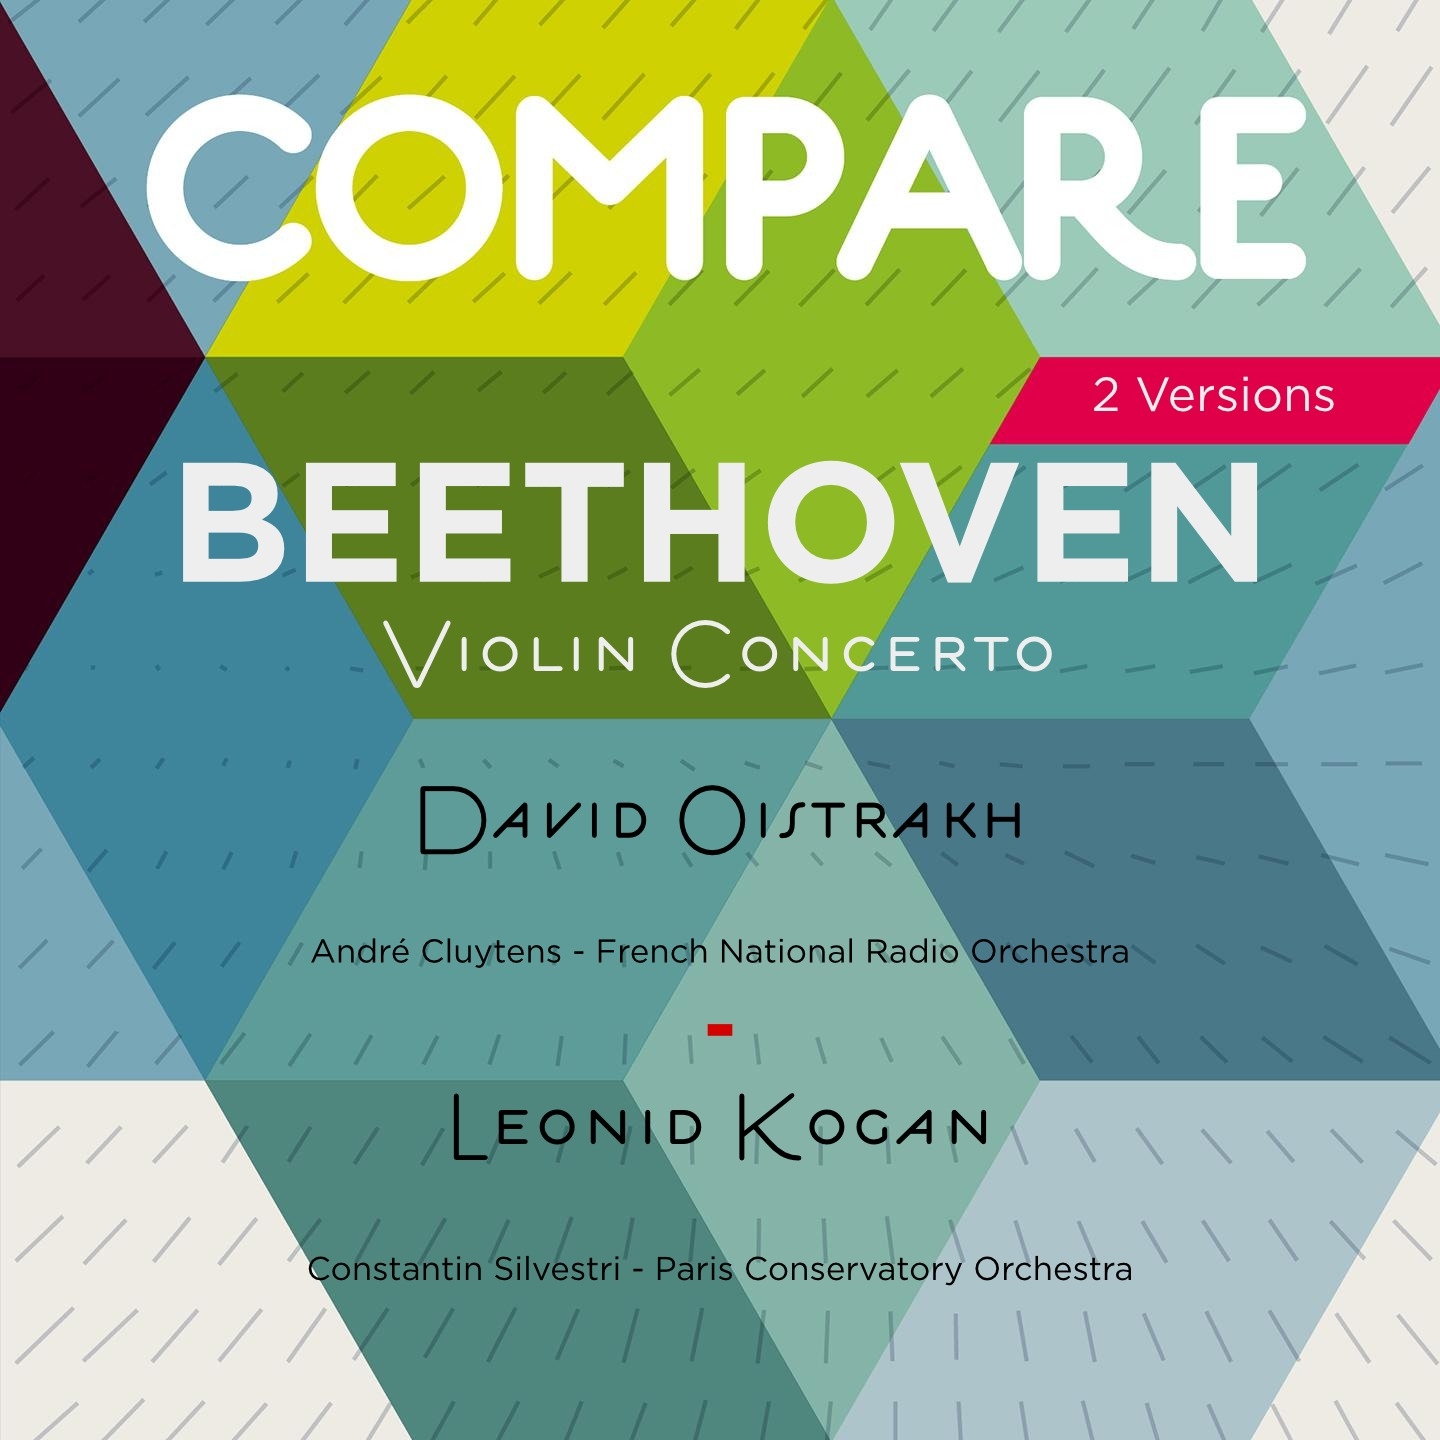 Concerto for Violin in D Major, Op. 61: I. Allegro ma non troppo (Cadenza By Fritz Kreisler)